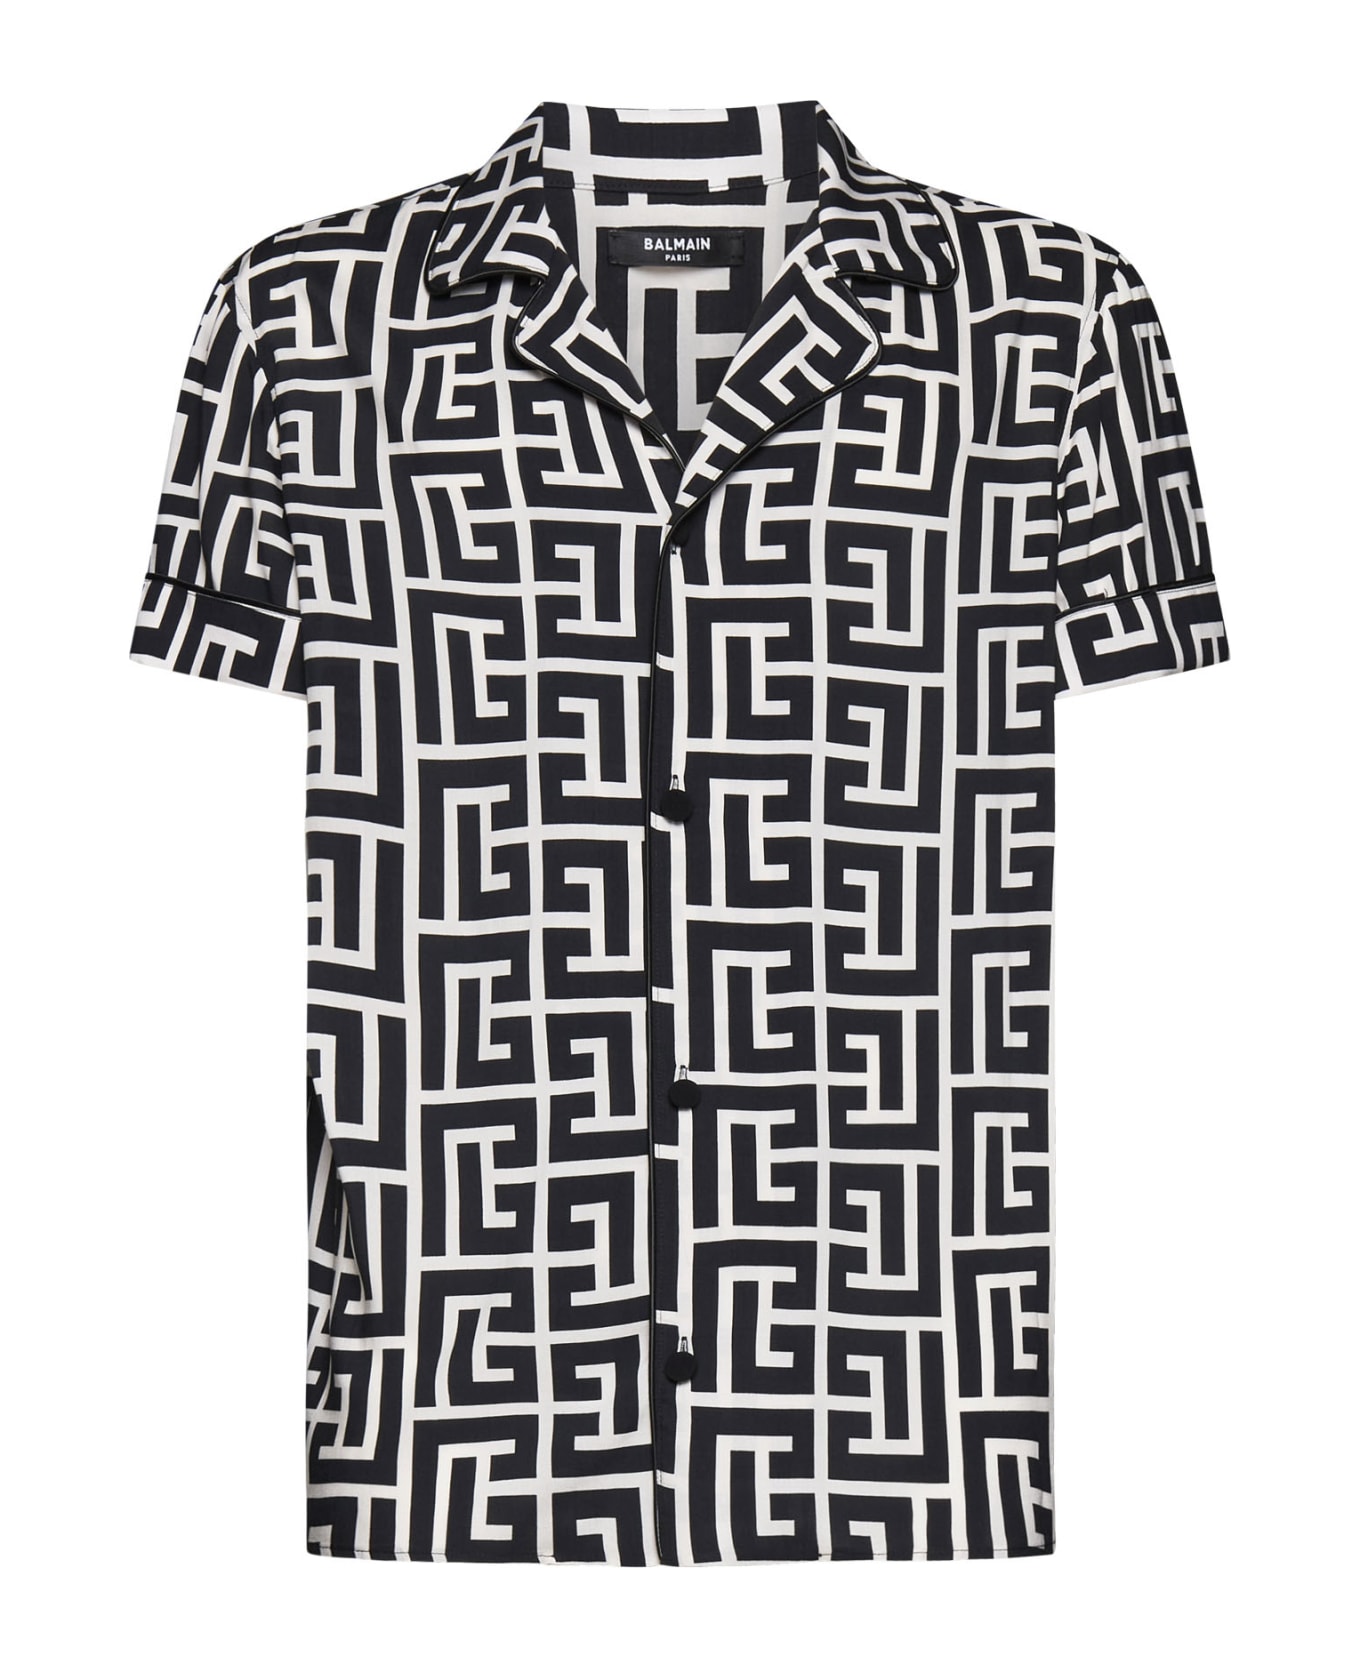 Balmain Monogram Print Viscose Shirt - Ivoire/noir シャツ